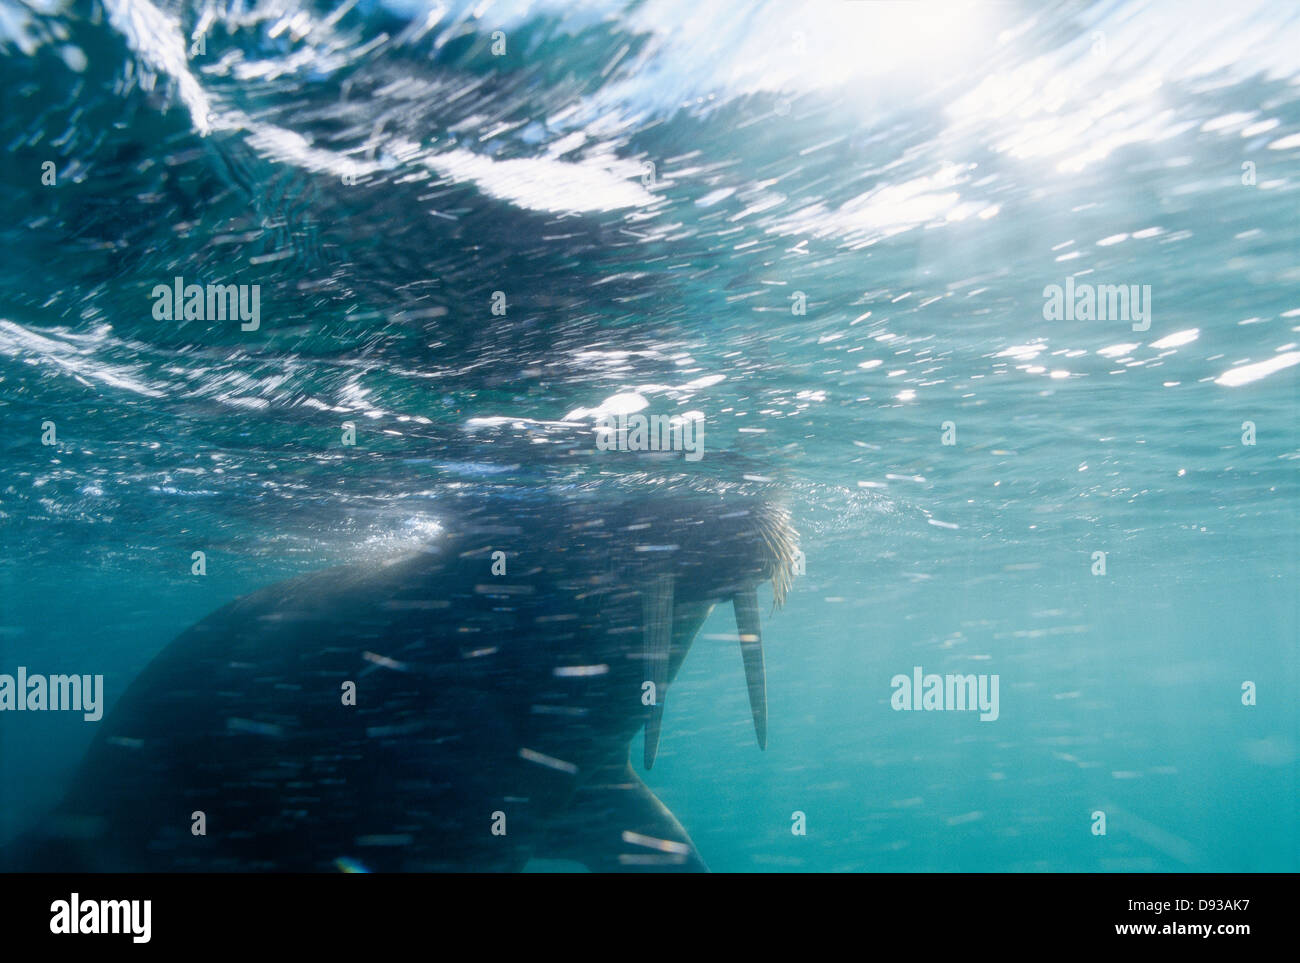 Walrus in water Stock Photo - Alamy